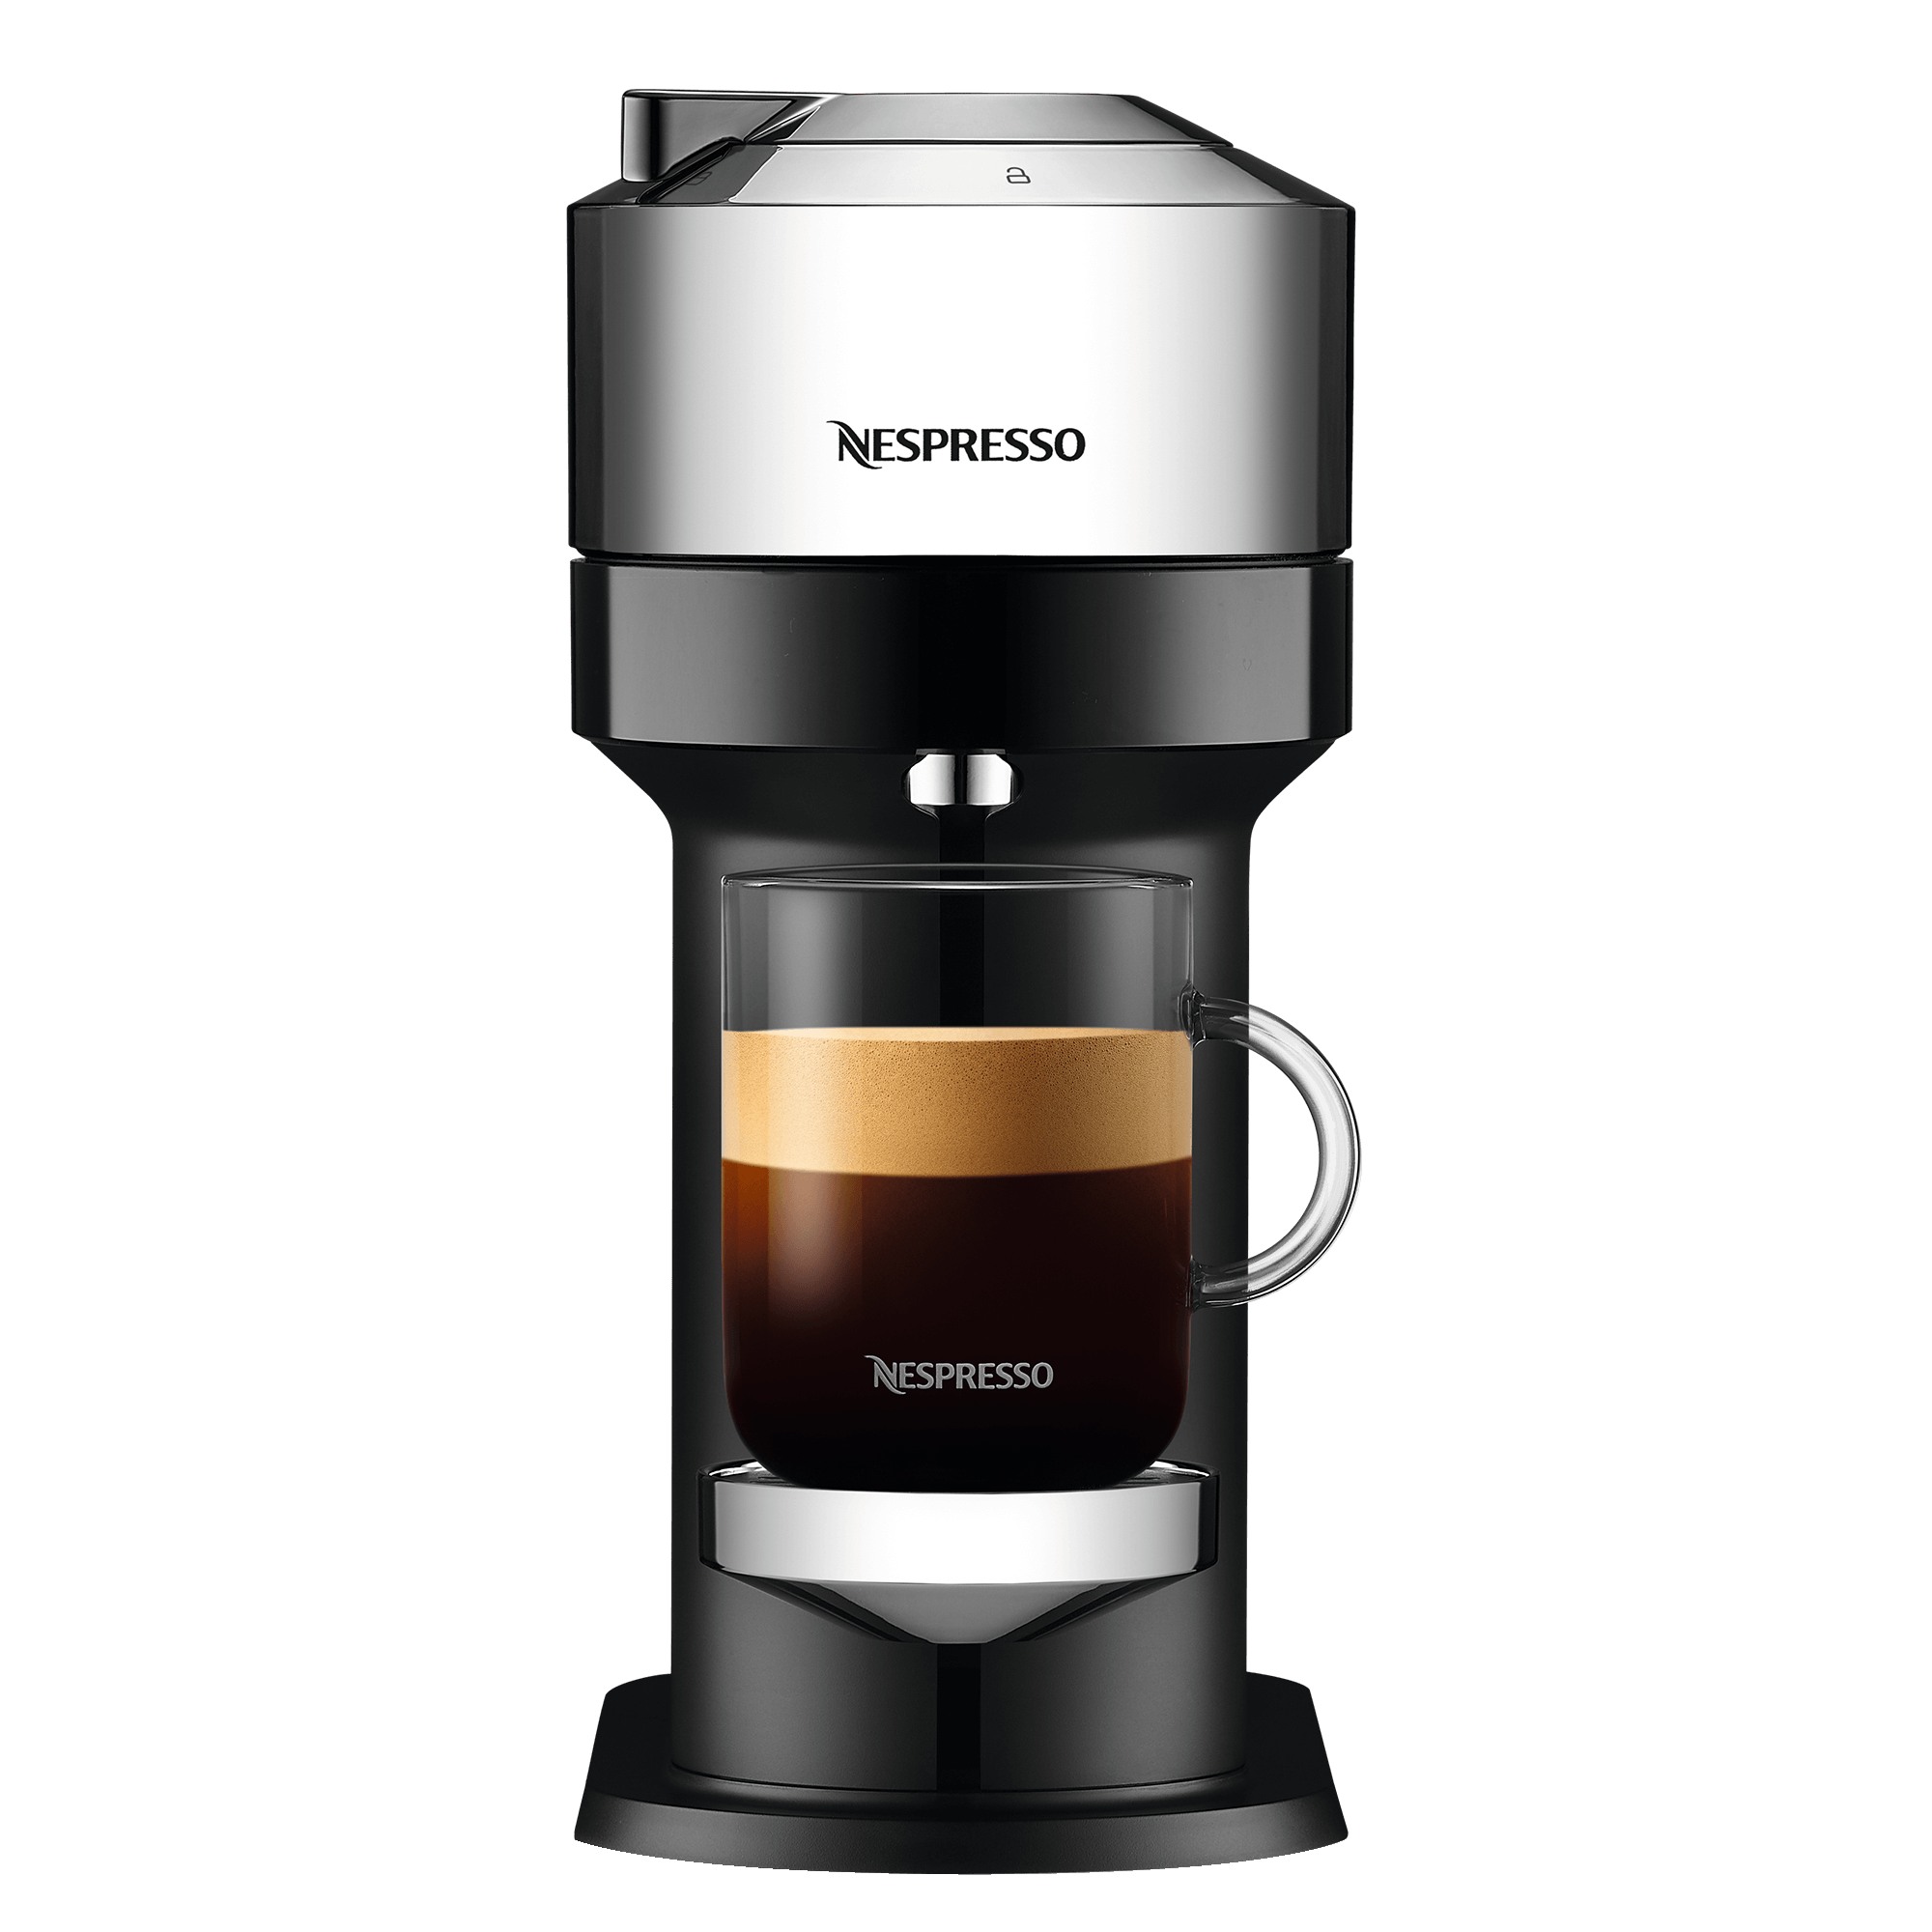 Cafeteras express de cápsula Compatible con Nespresso Krups Vertuo Next  XN910B10 L - Gris/Negro